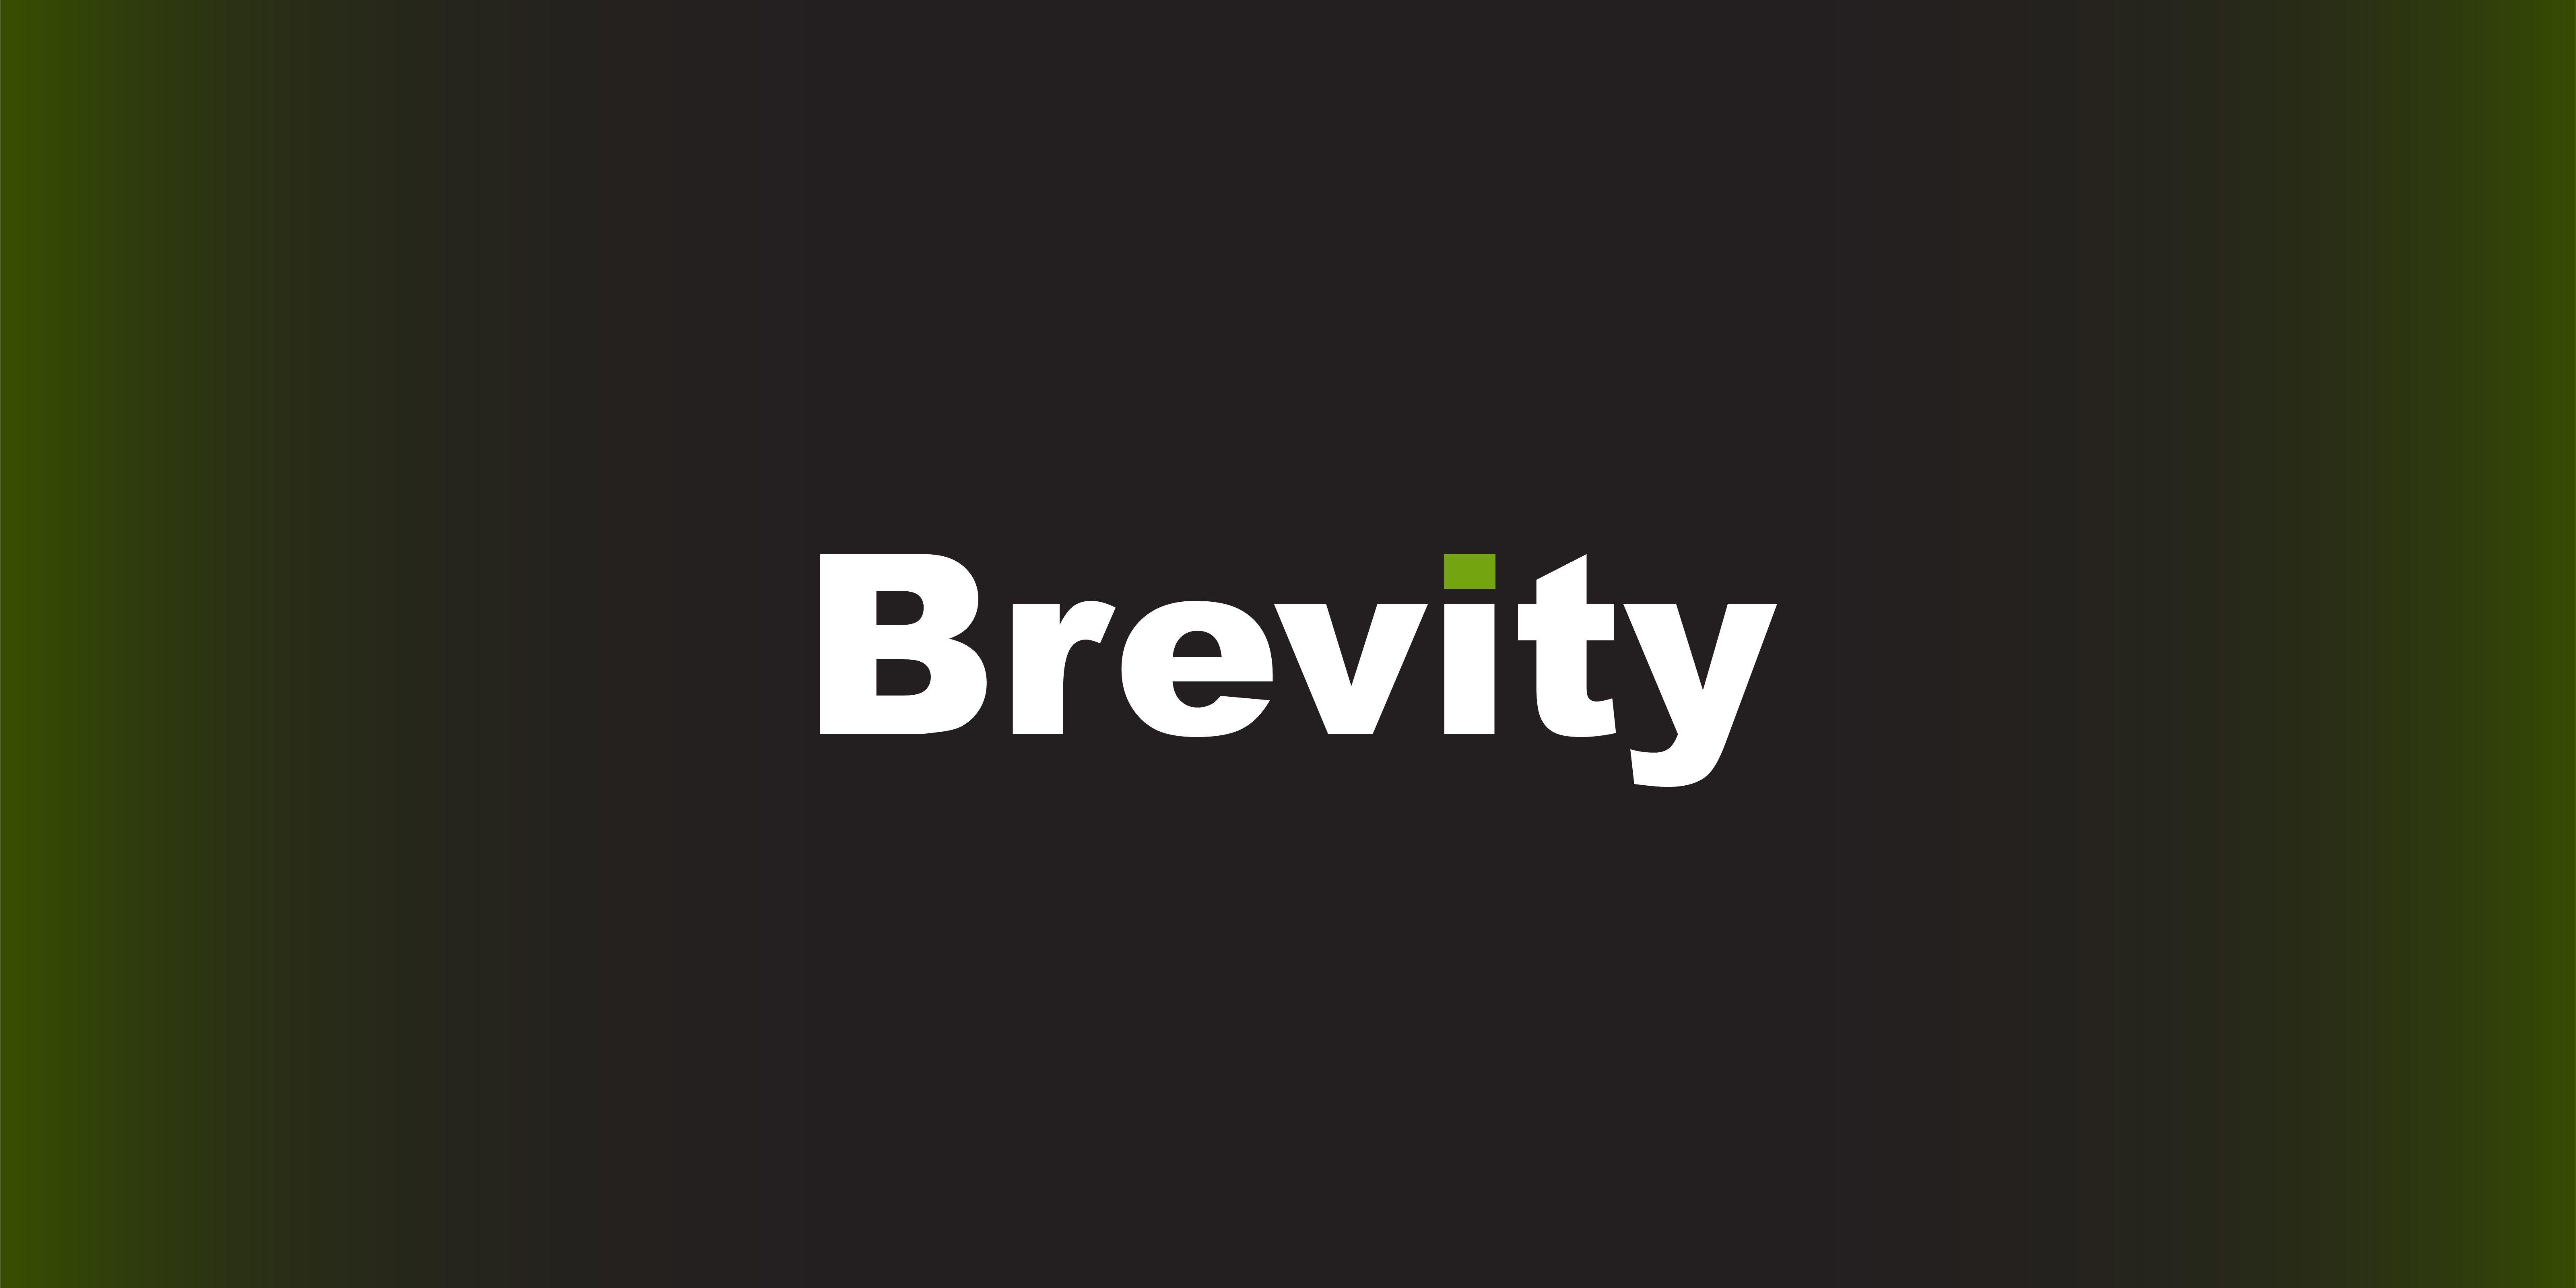 Abrevity Logo - Brevity